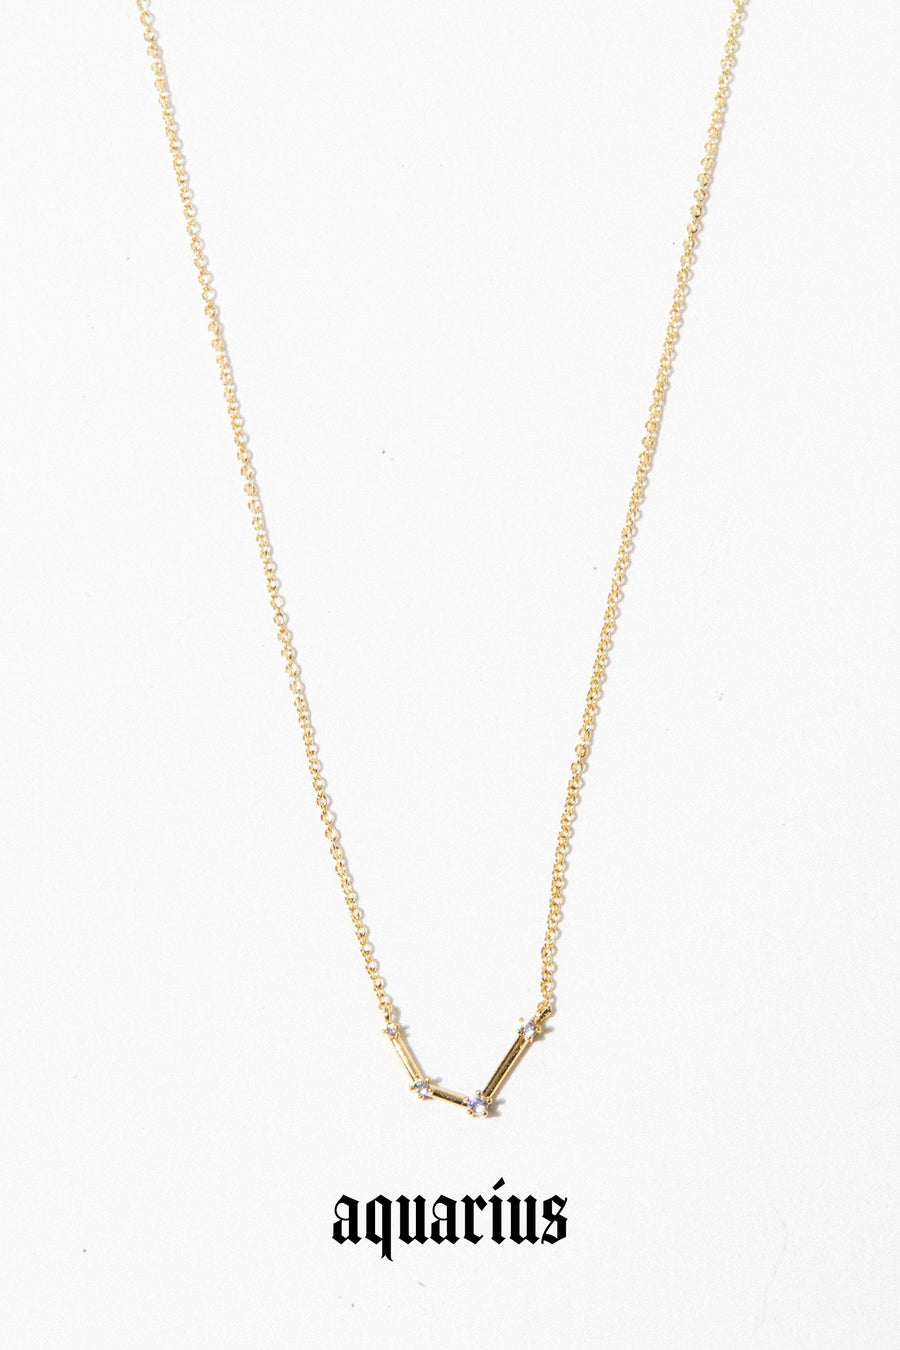 charis Jewelry Aquarius / 16 Inches / Gold Constellation Necklace